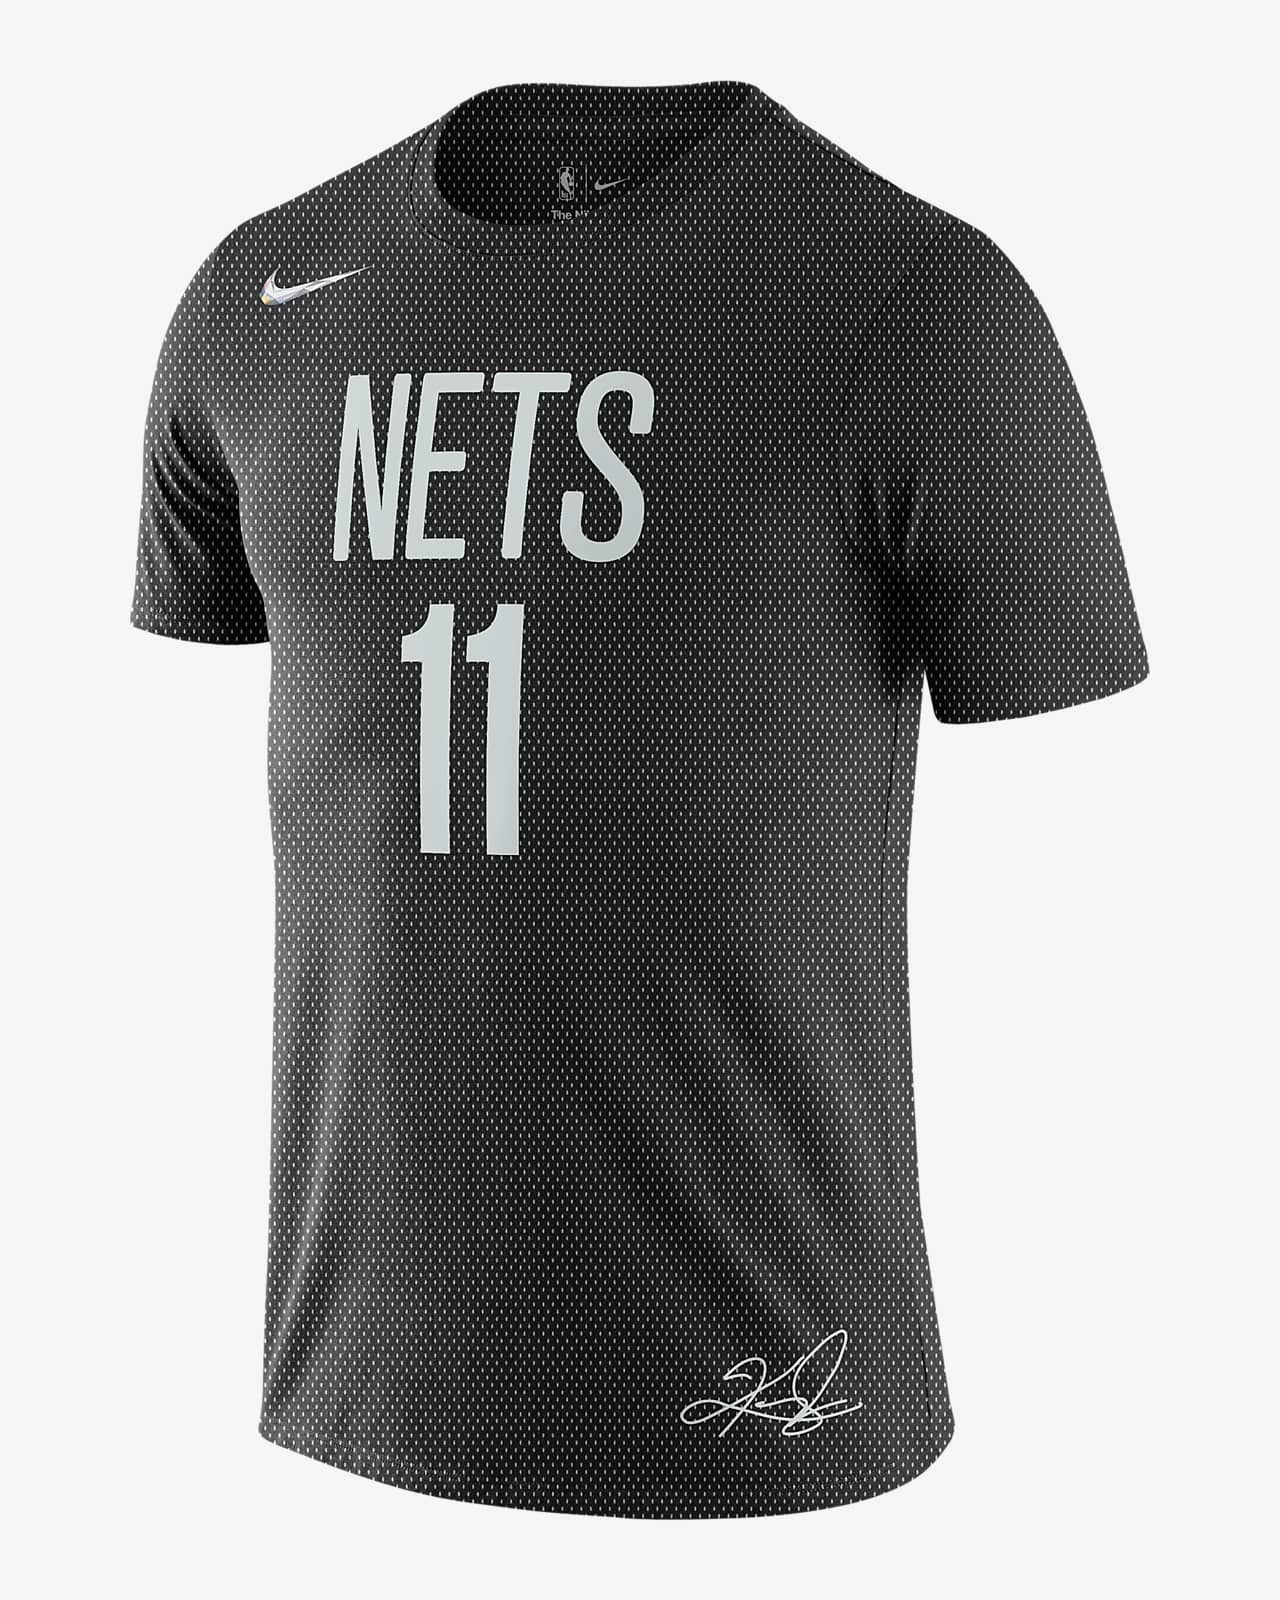 Kyrie Irving Nets Men's Nike NBA T-Shirt